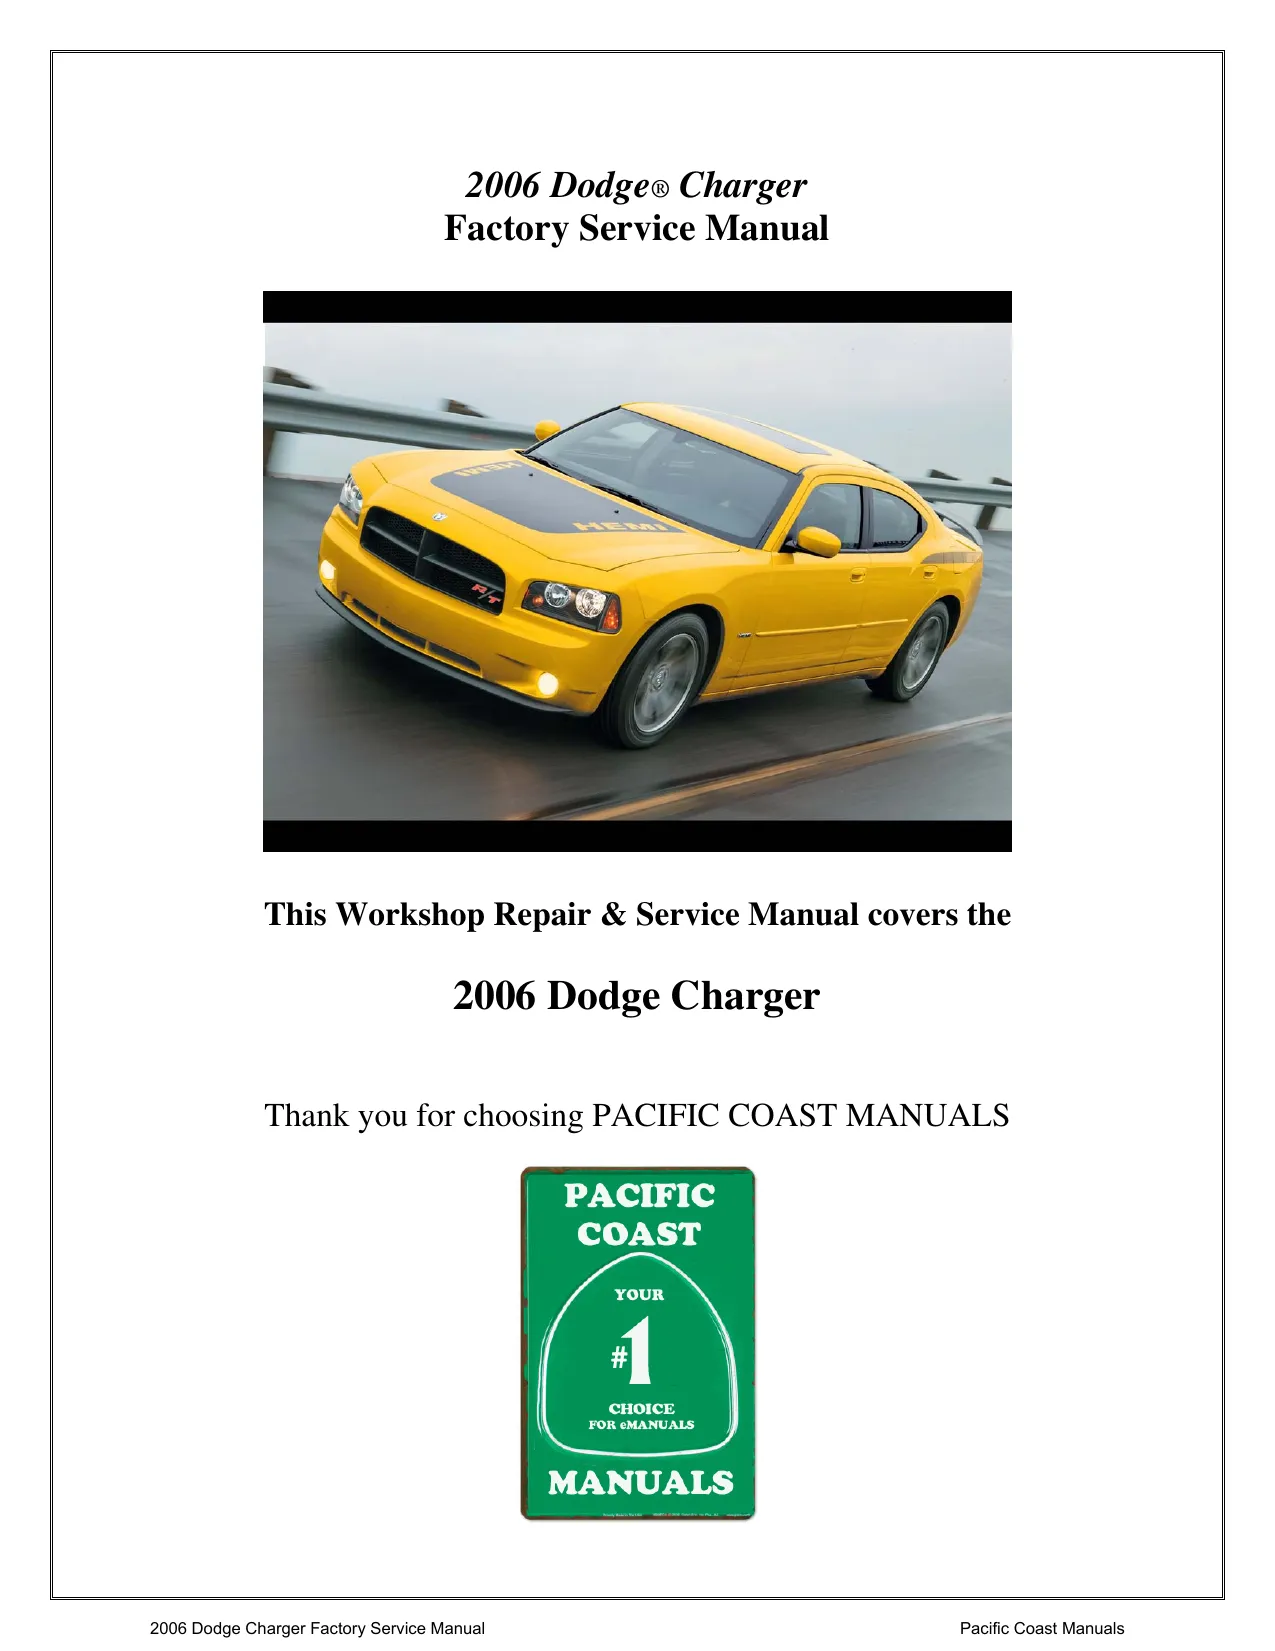 2006 Dodge Charger 300, 300C, SRT-8 series shop manual Preview image 1